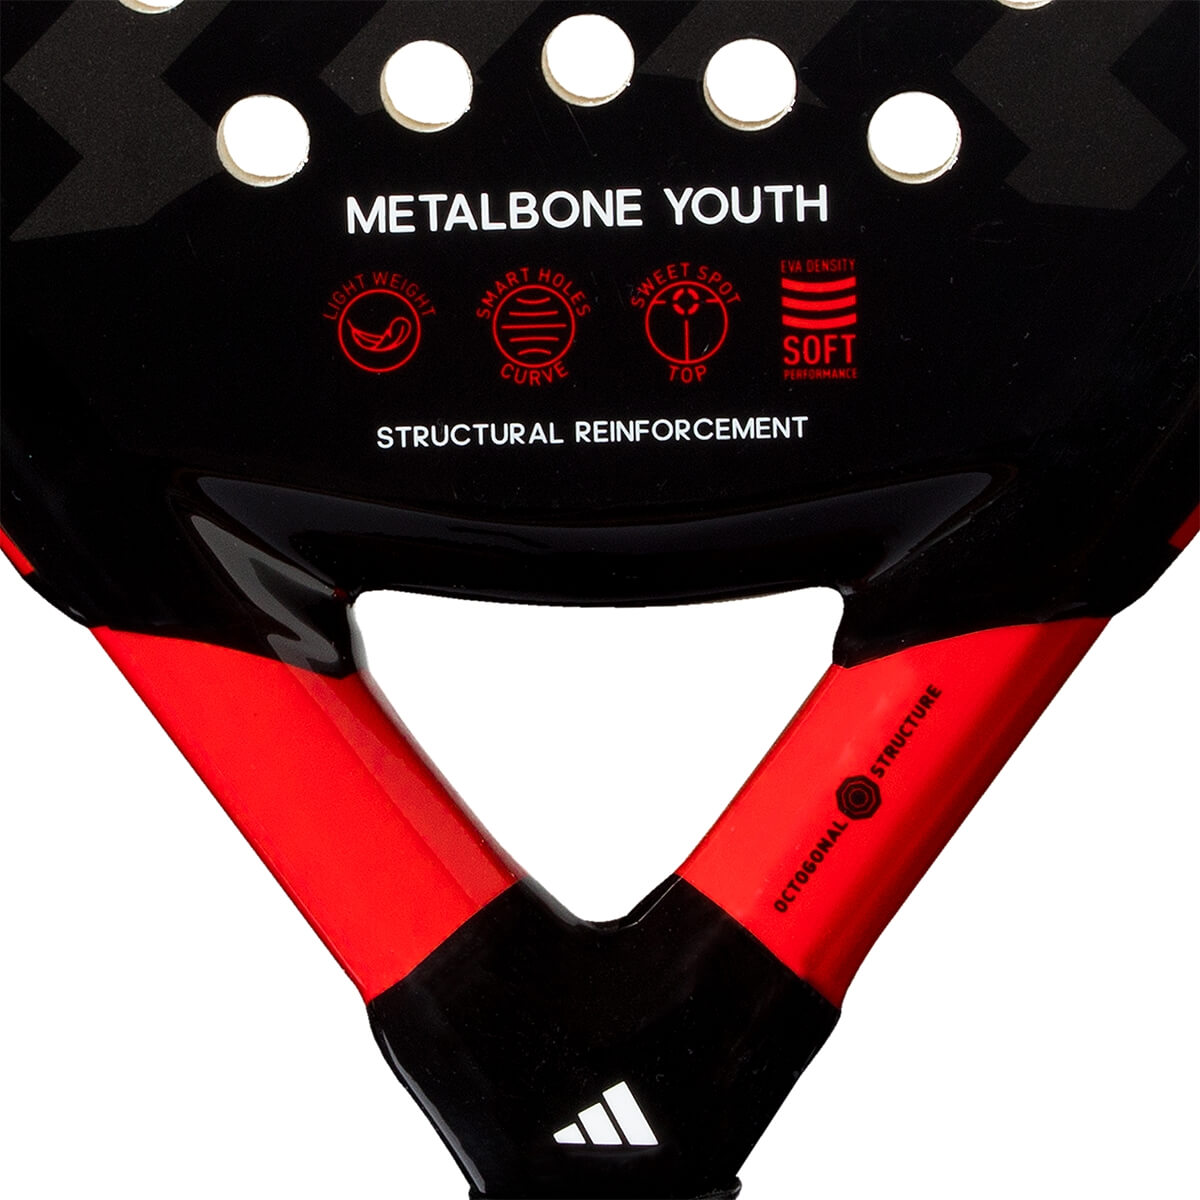 Adidas Metalbone Youth 3.2 close-up view